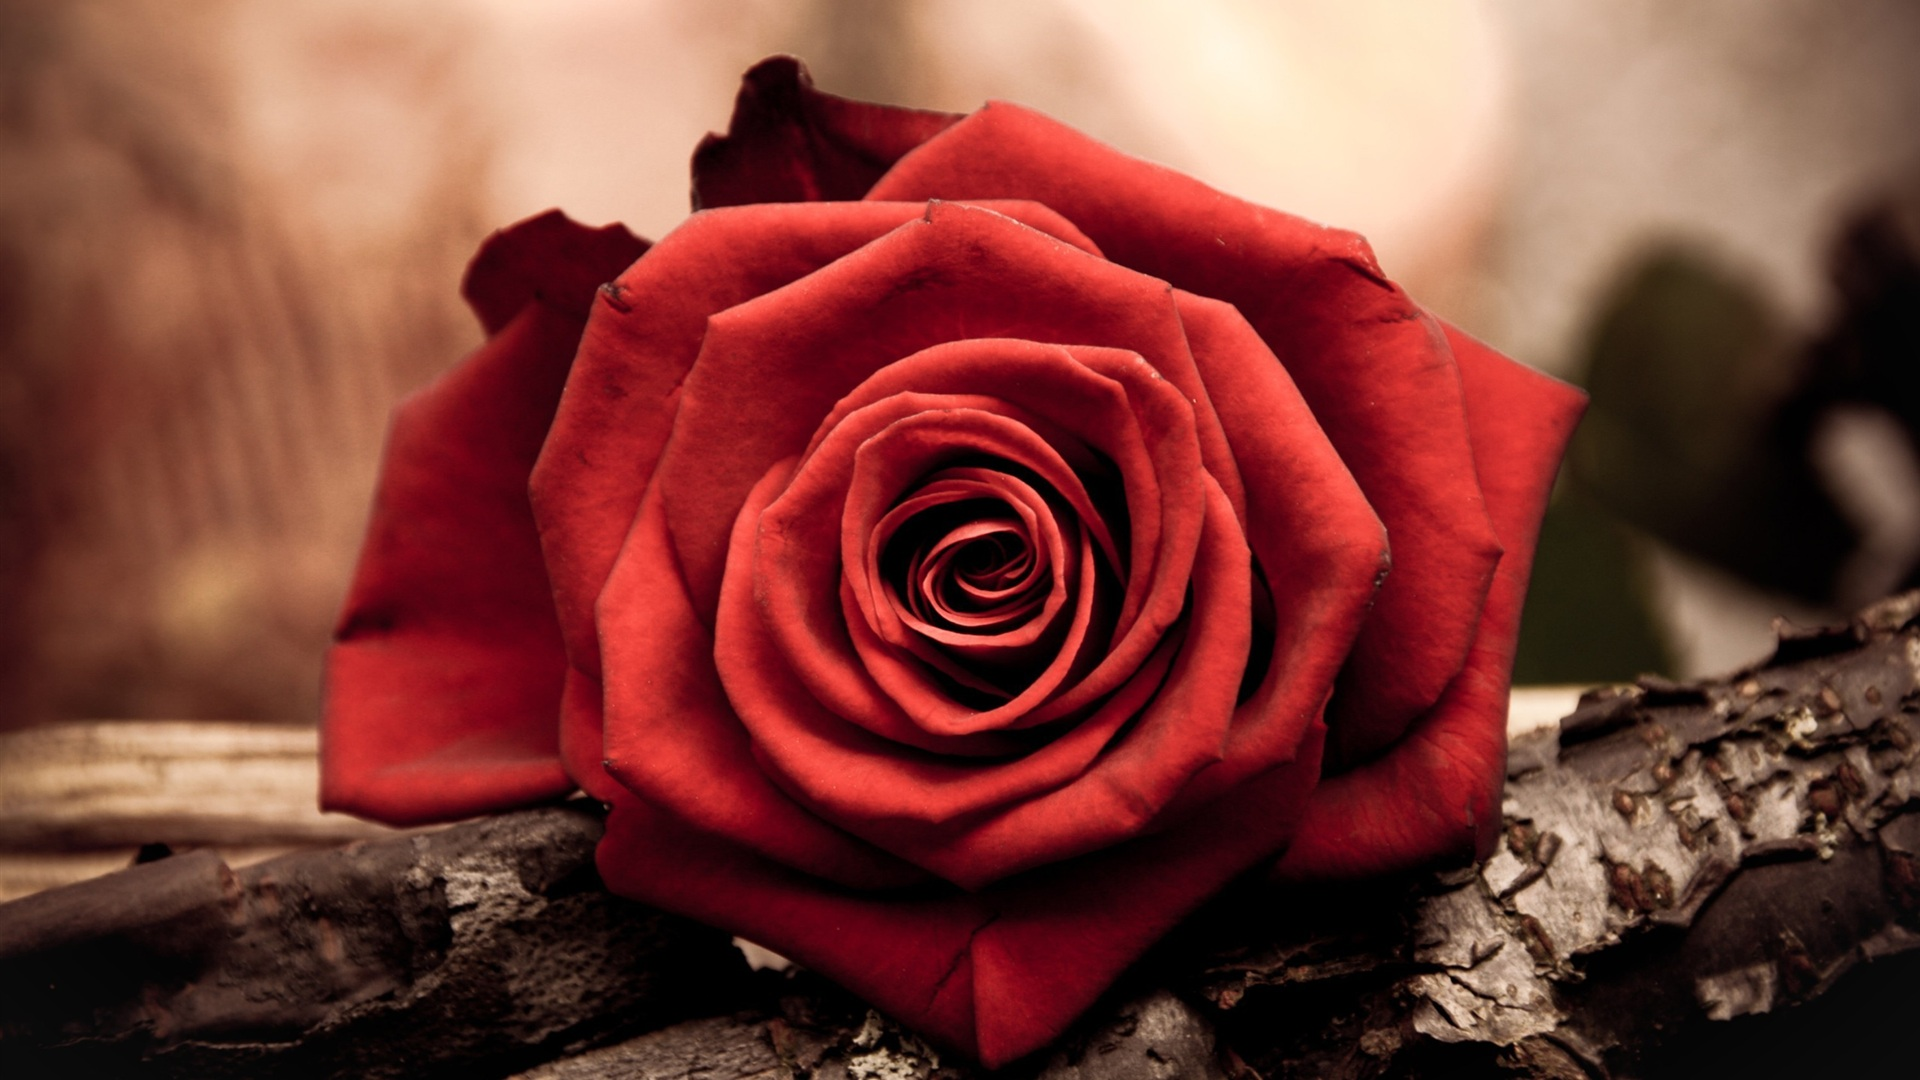 red-rose-flower-desktop-wallpaper-1920x1080 - Magic4Walls.com